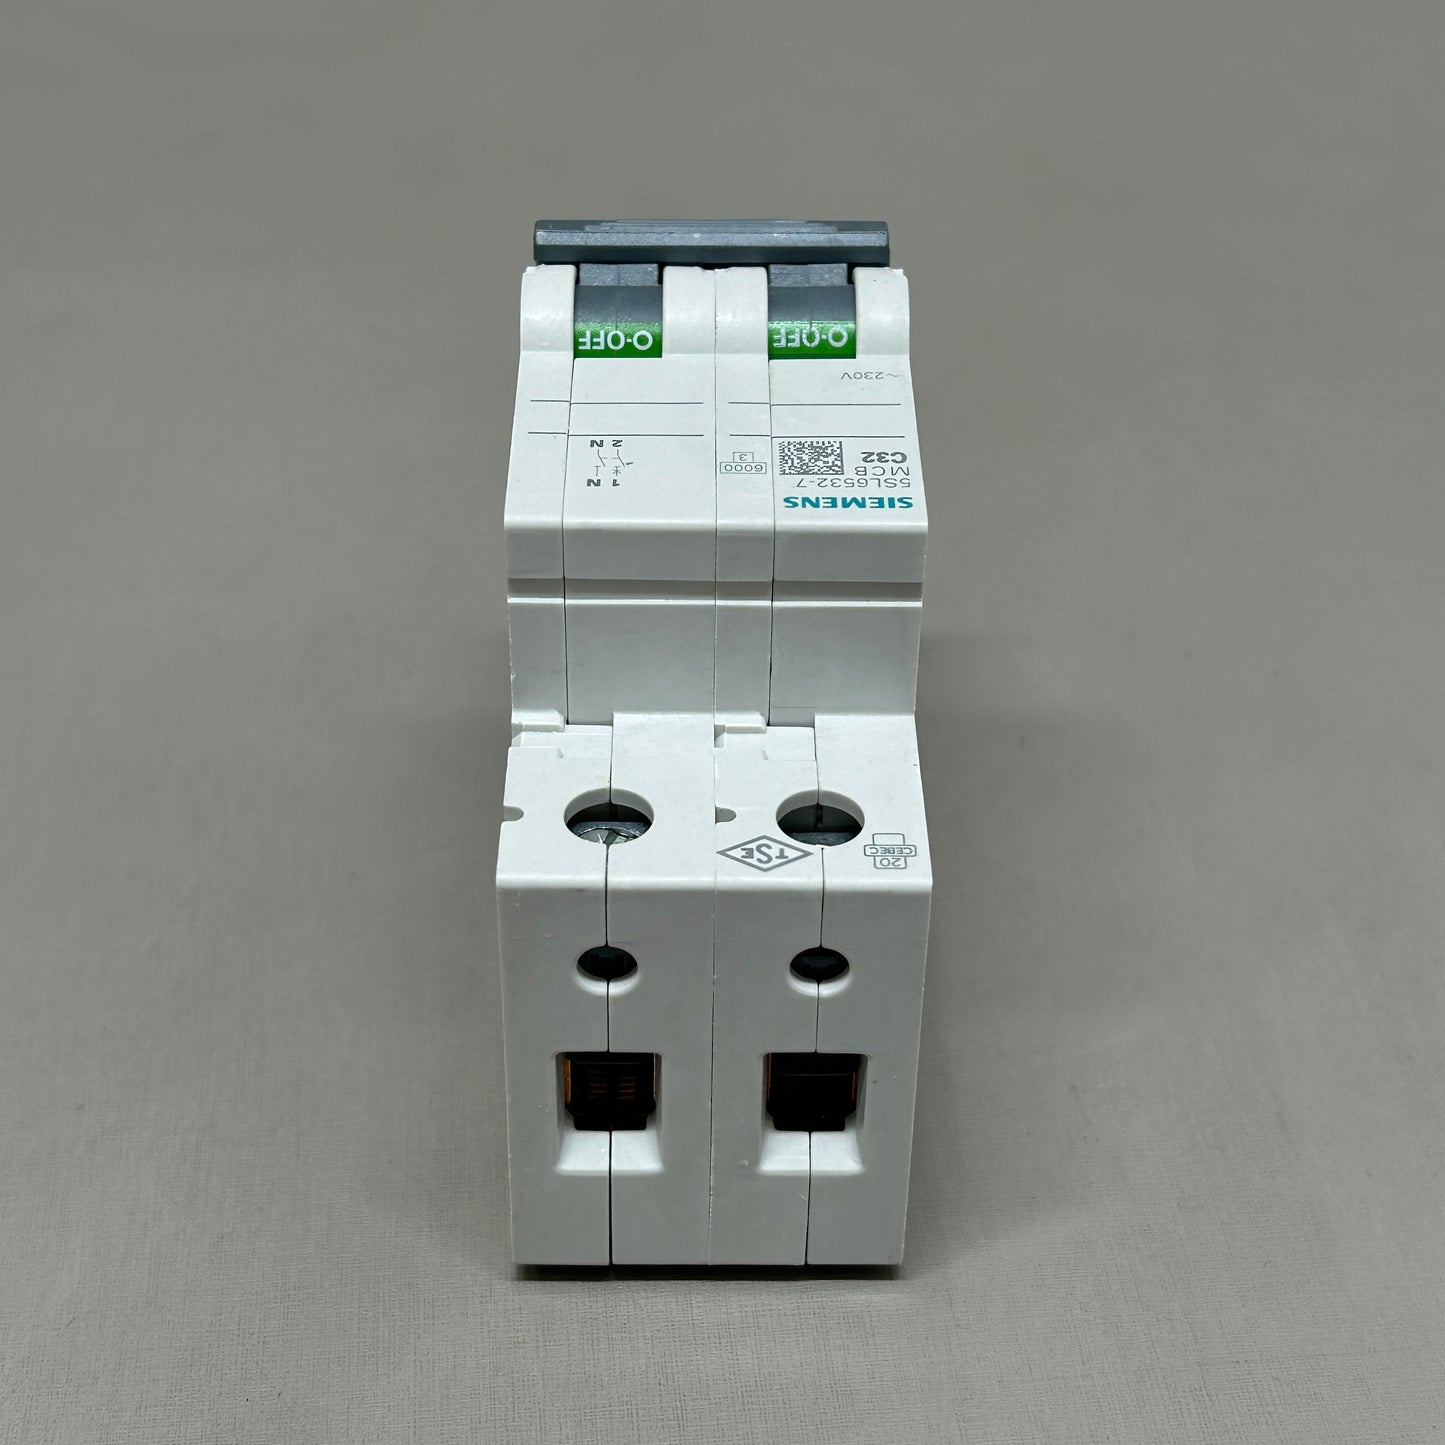 SIEMENS Miniature Circuit Breaker 230 V 6kA, 32 A, D=70 mm Off-White 5SL6532-7 (New)